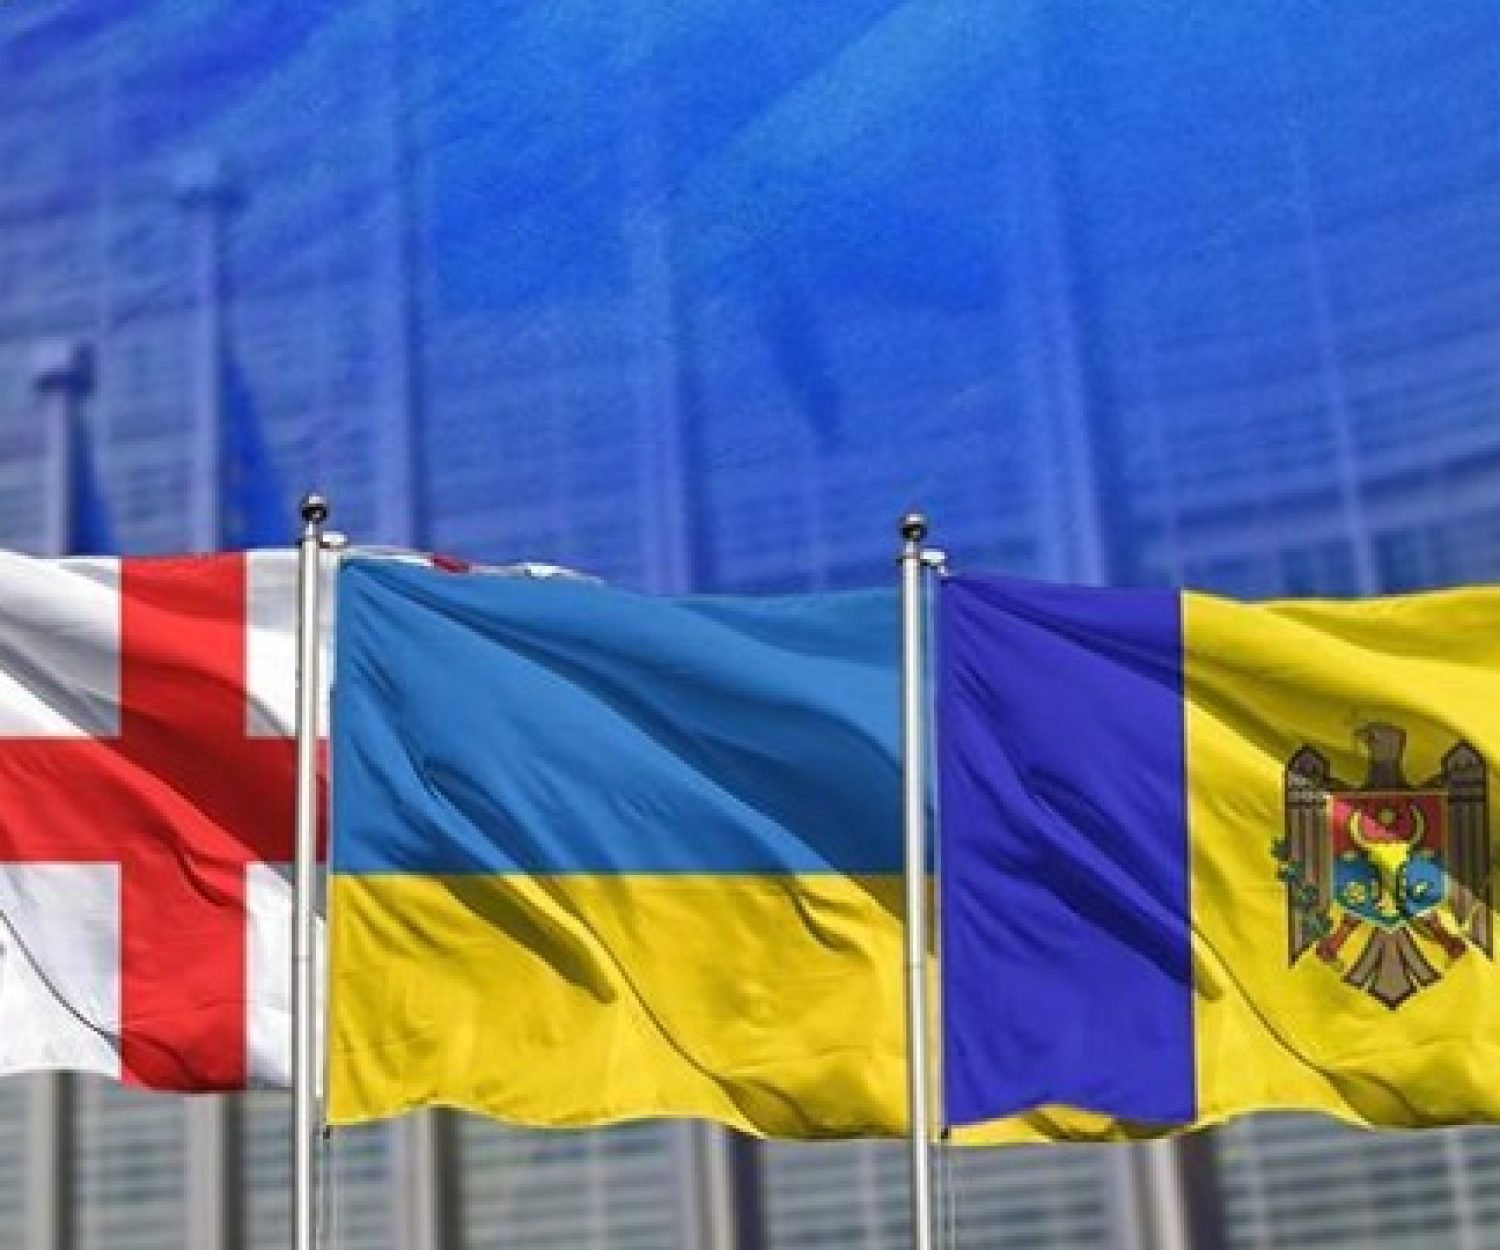 Молдавия нато входит или нет. Украины, Грузии и Молдавии и ЕС. Украина Грузия Молдова НАТО. Флаги НАТО Украины и Грузии. Украина Молдавия Евросоюз.